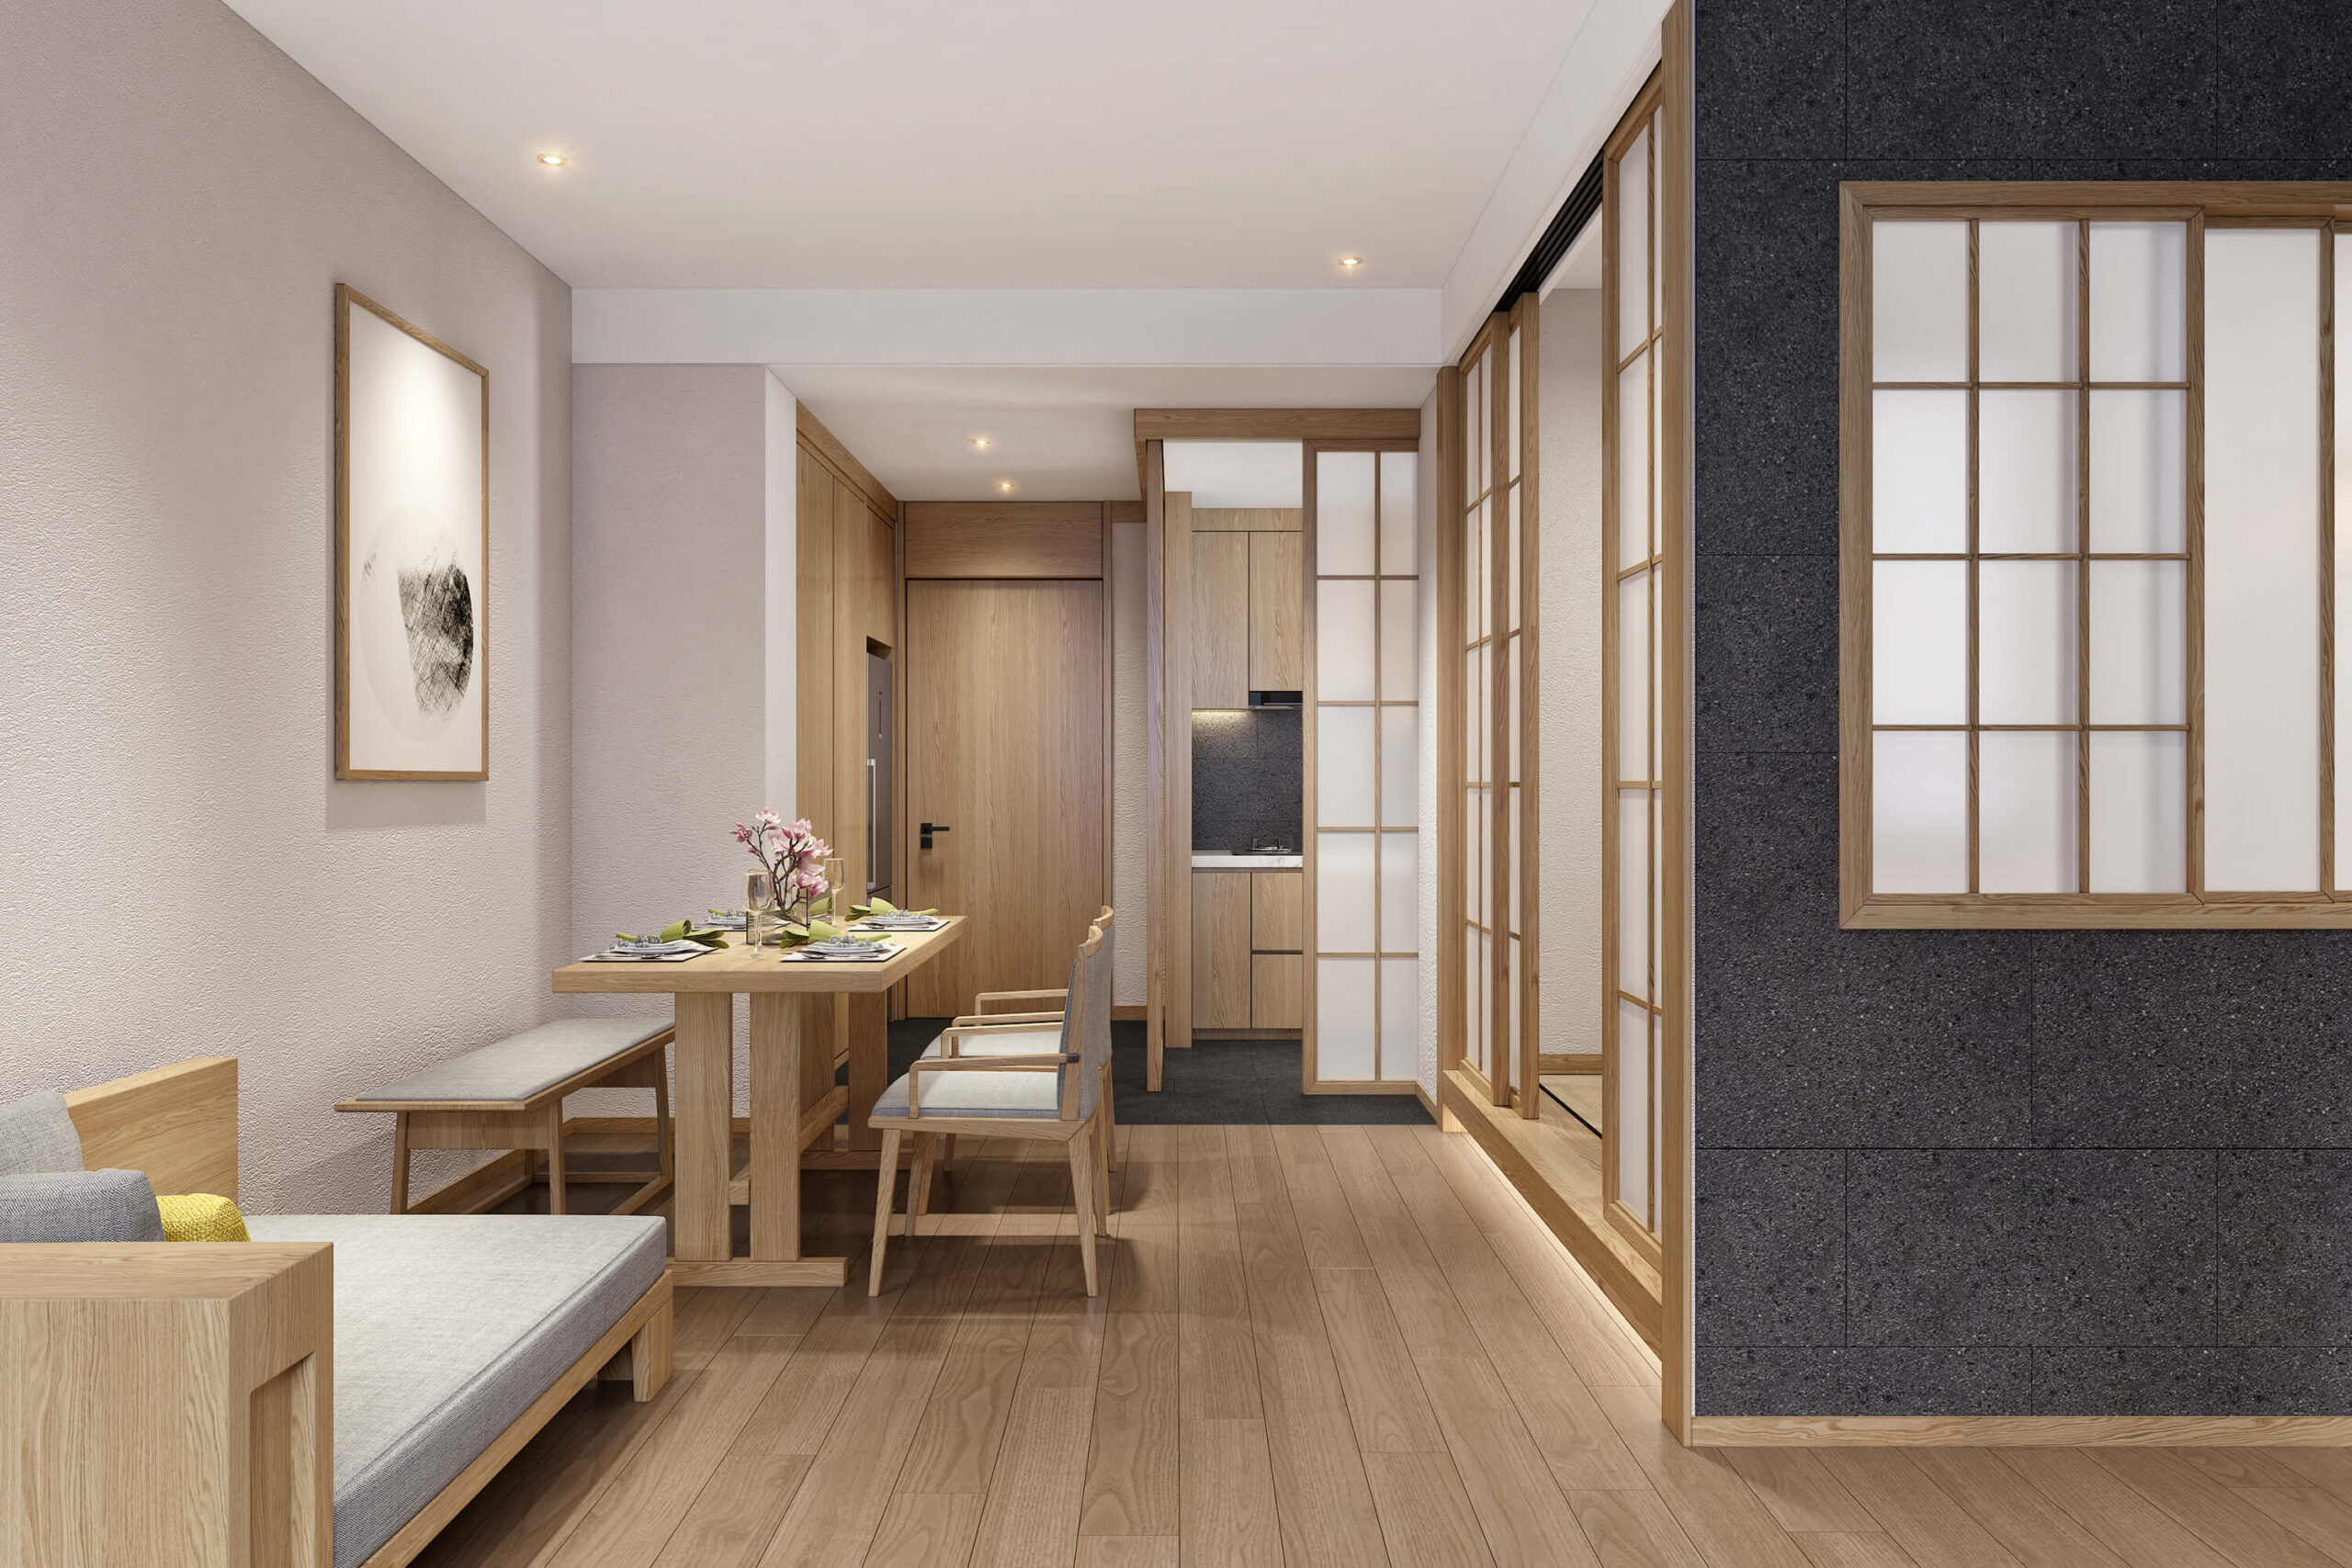 32——CRESCENT HILLS · Apartment-半月山温泉小镇二期公寓 空间 室内设计 AkayJane (9)